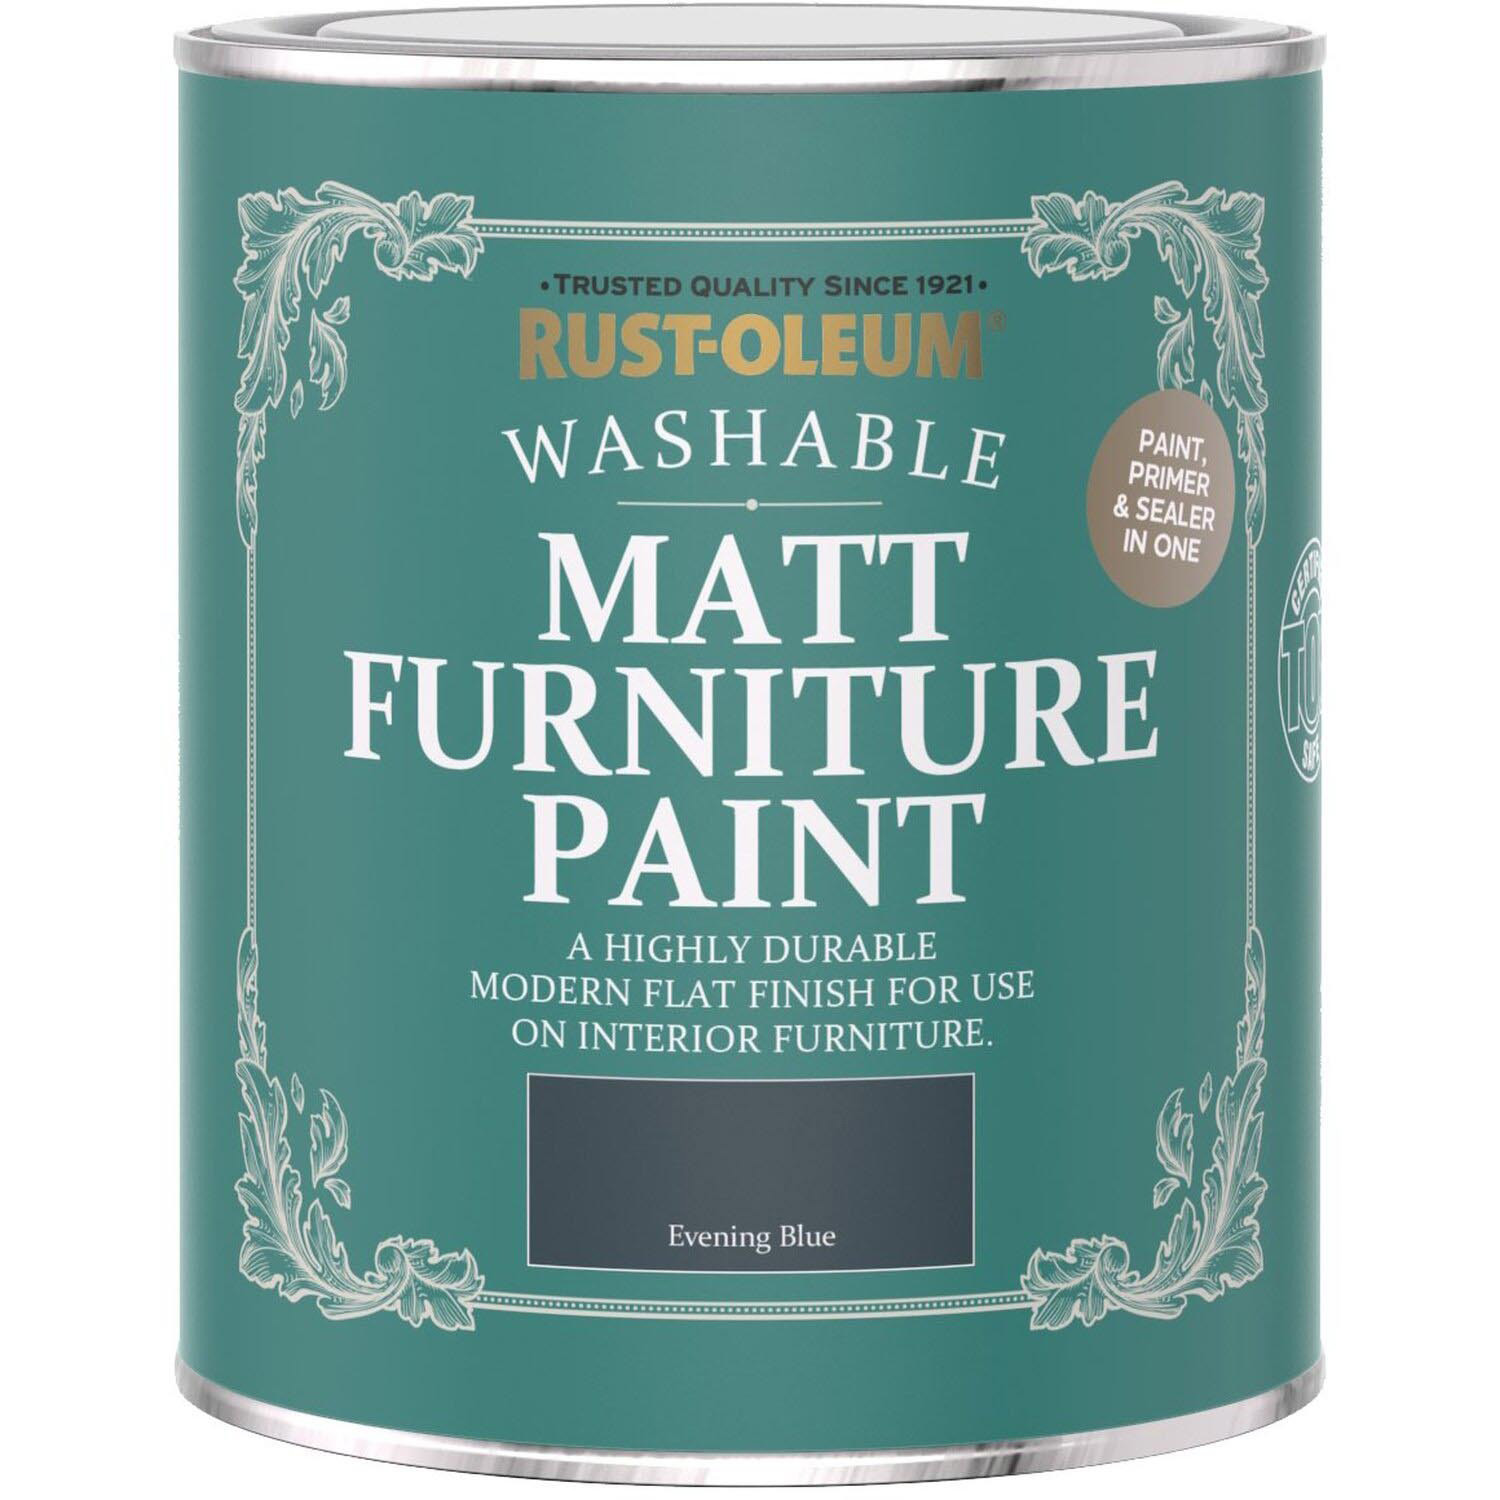 Rust-Oleum Evening Blue Matt Furniture Paint 750ml Image 2